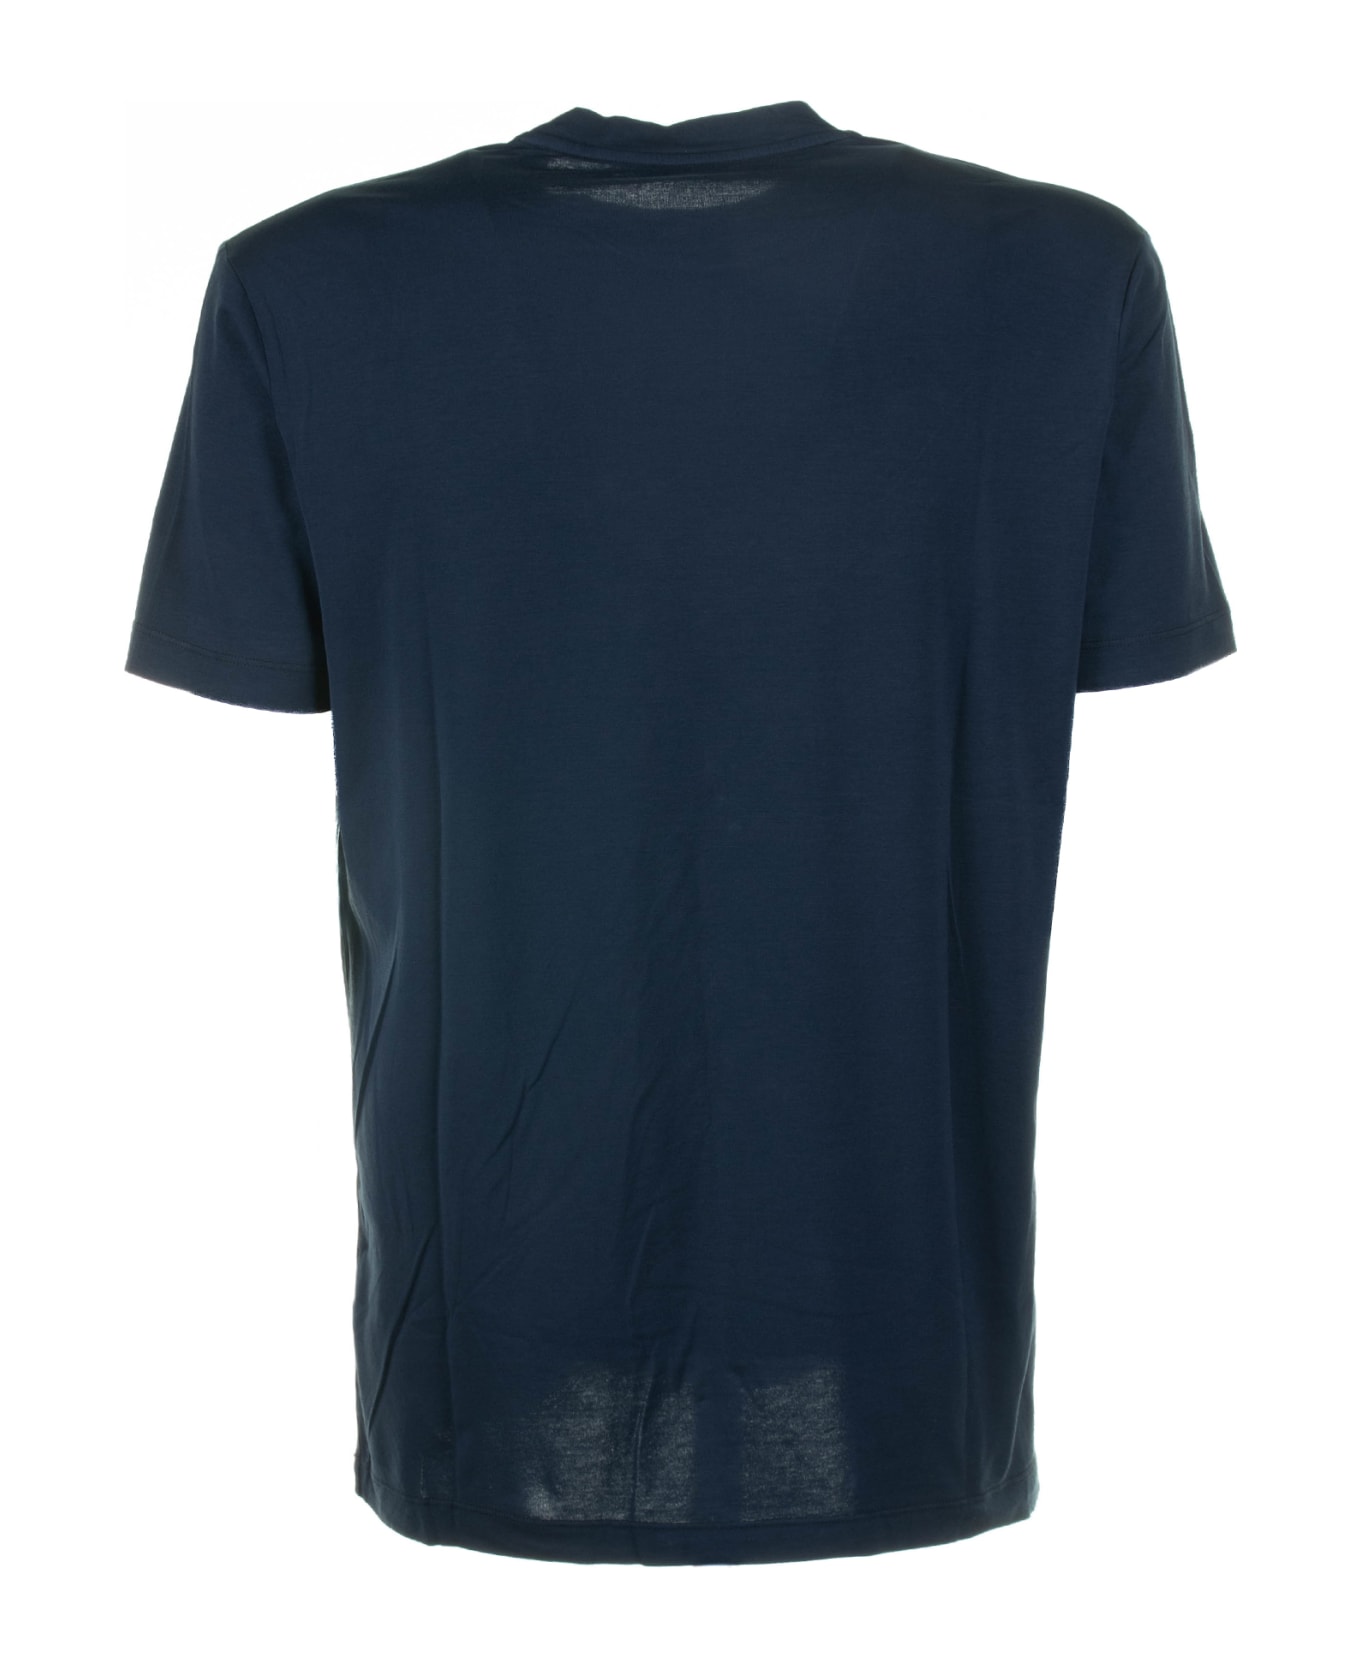 Altea Blue Cotton T-shirt - Blu シャツ